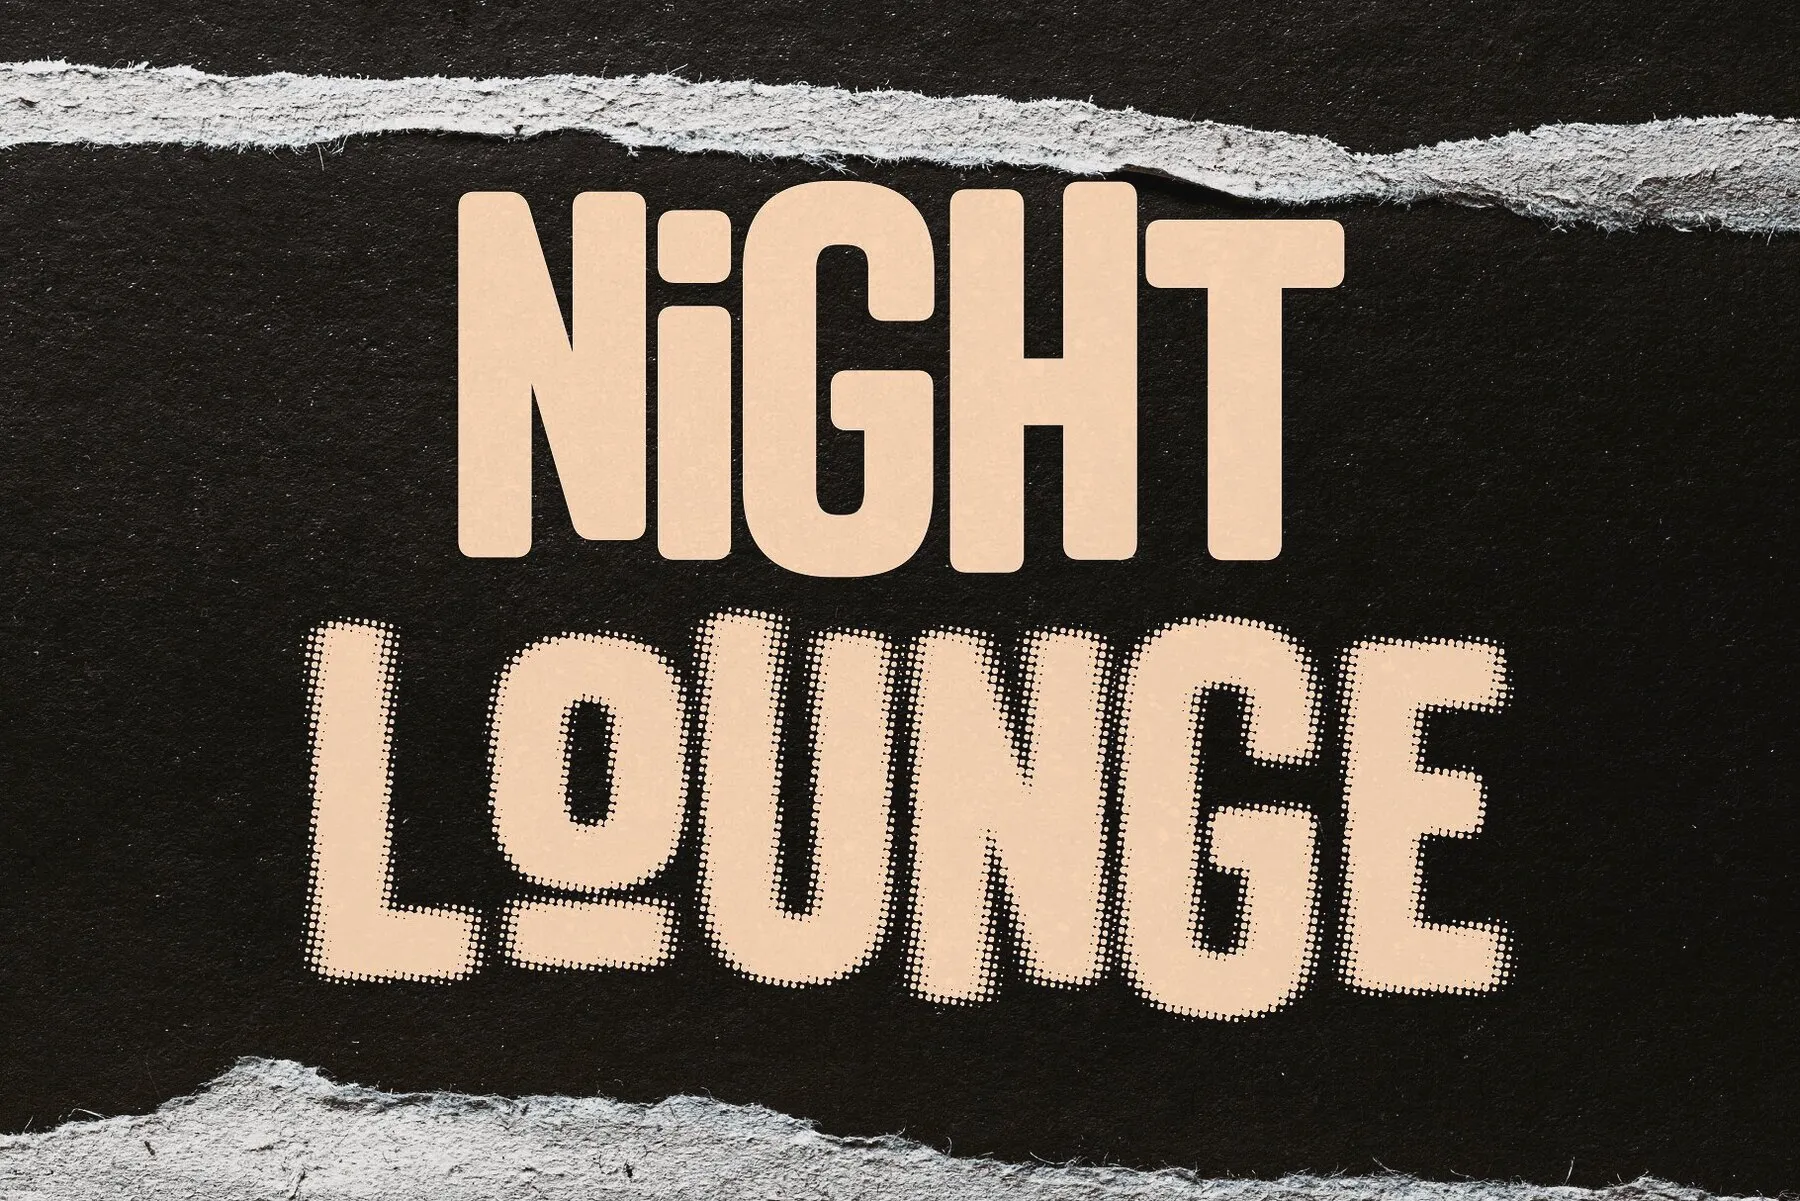 Night Lounge